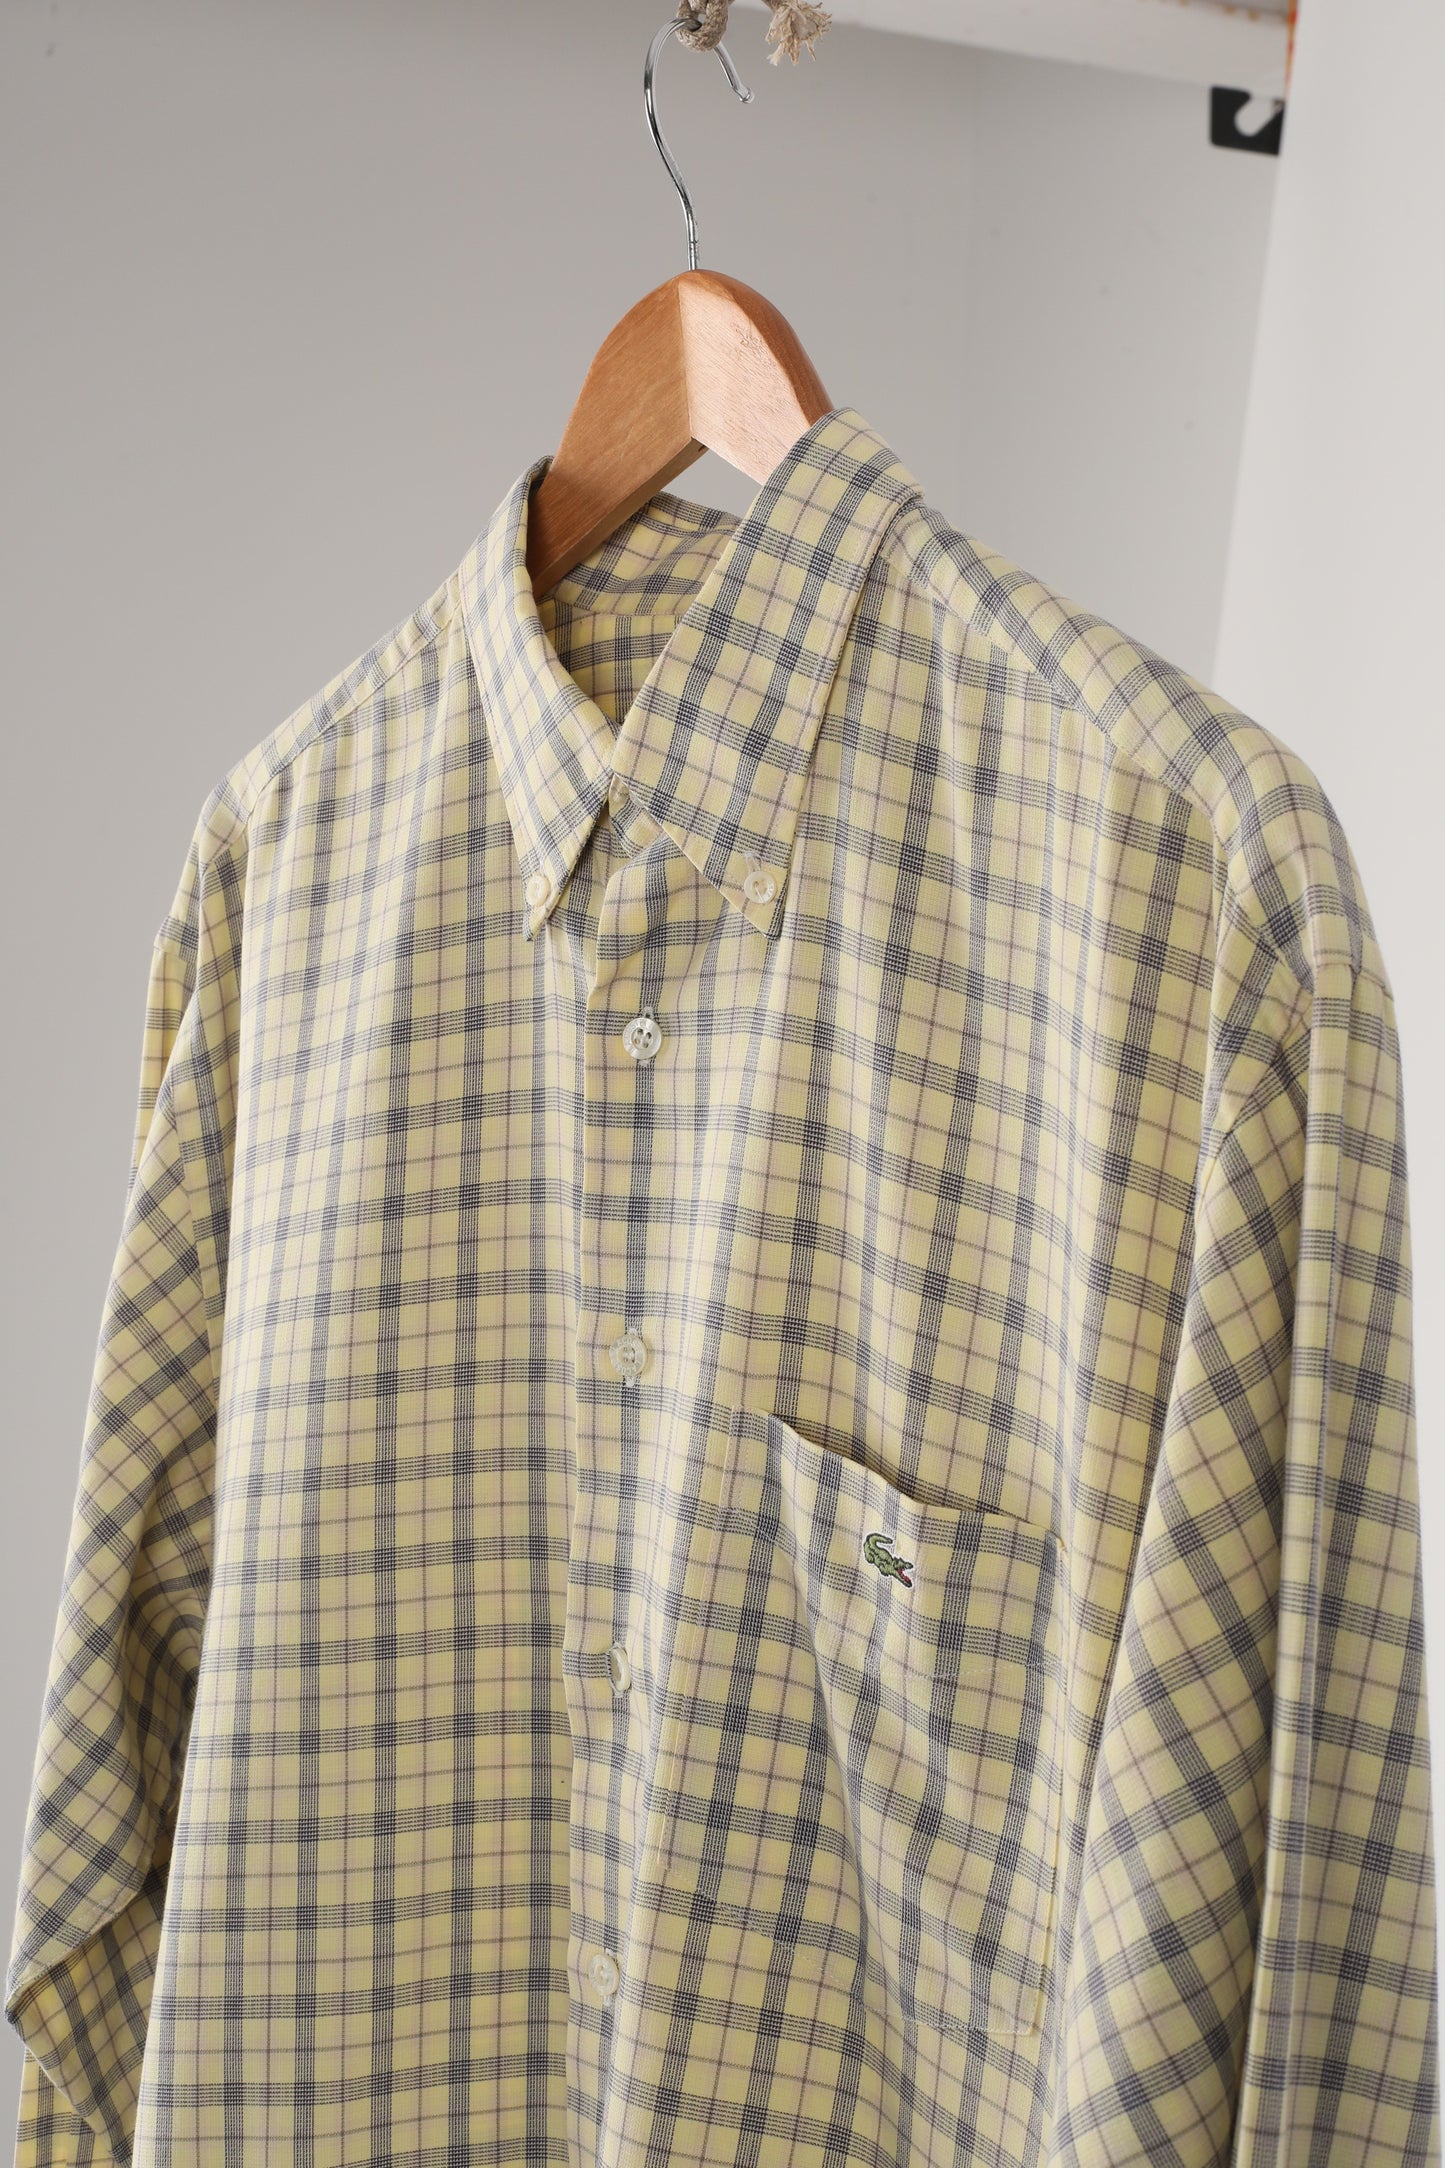 90s Lacoste Oxford shirt (L)